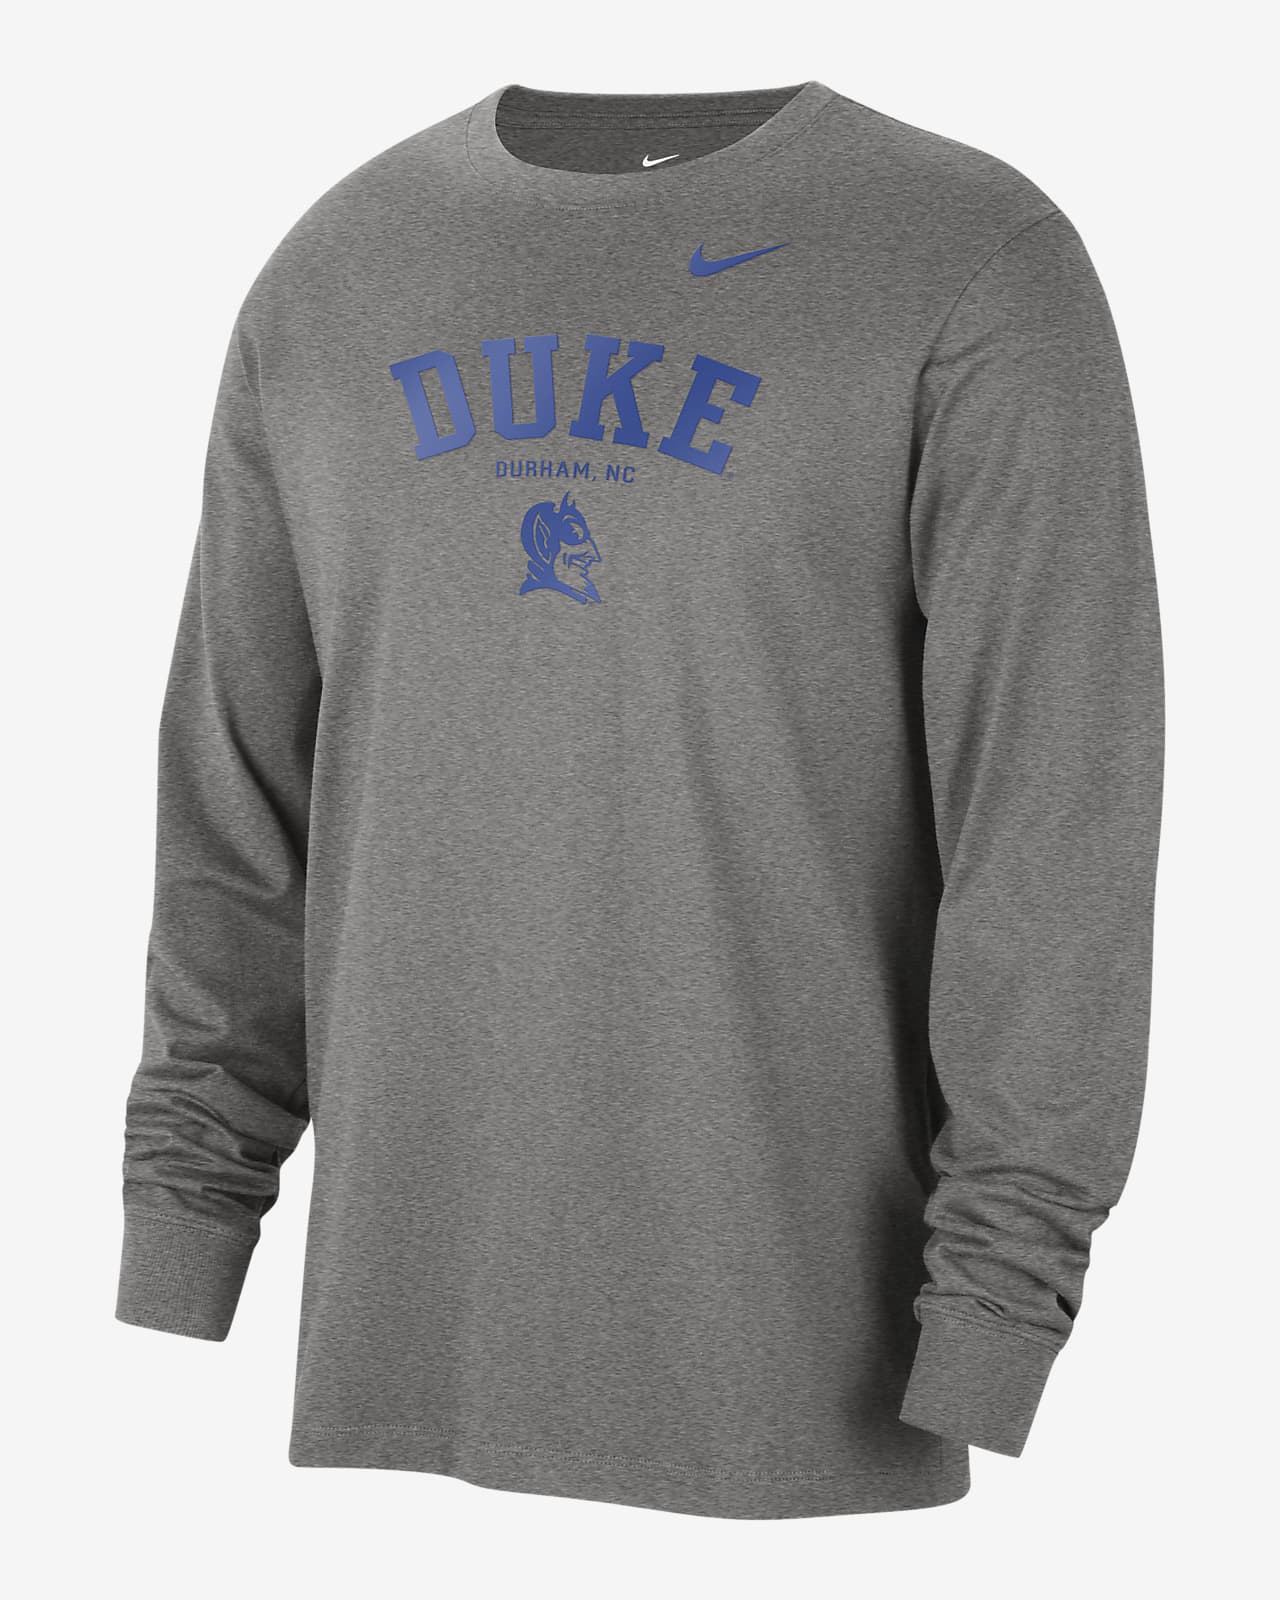 Nike Men's Duke Blue Devils Limited Basketball Road Jersey